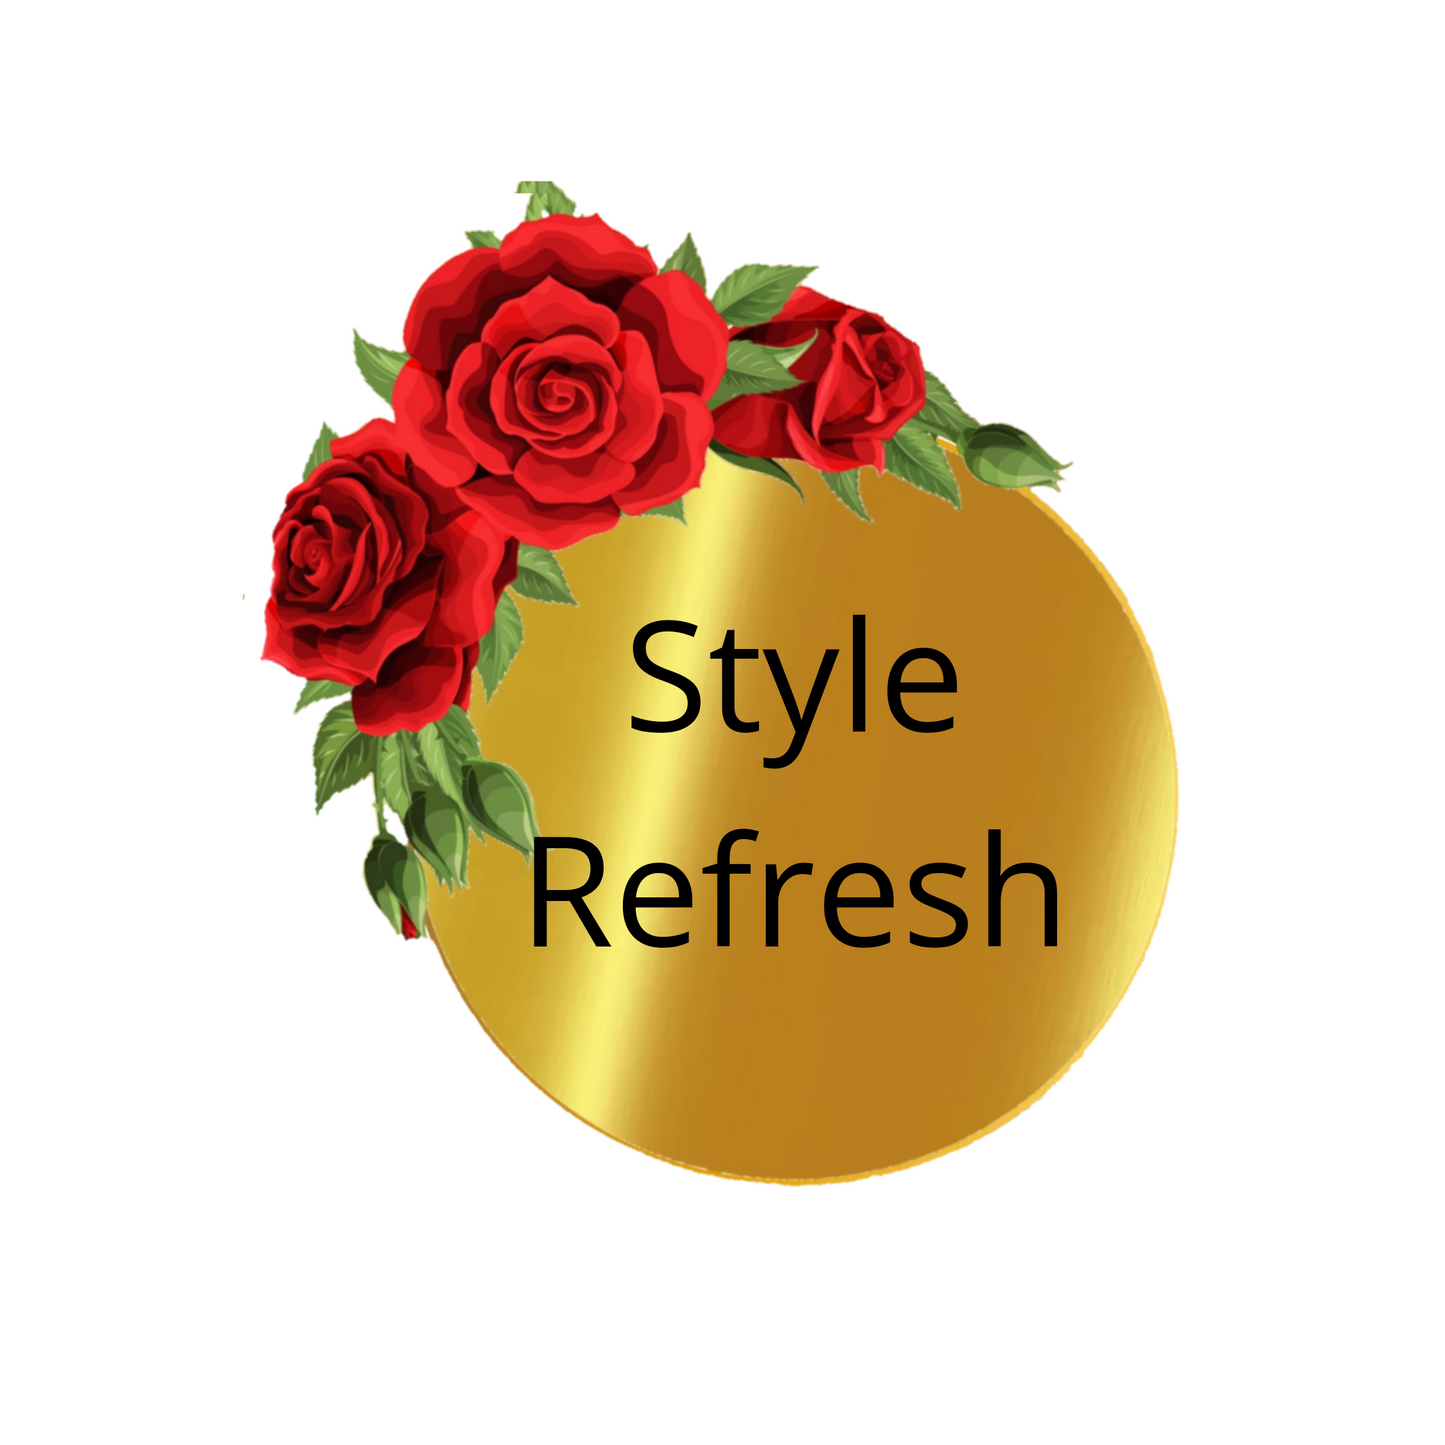 Style Refresh